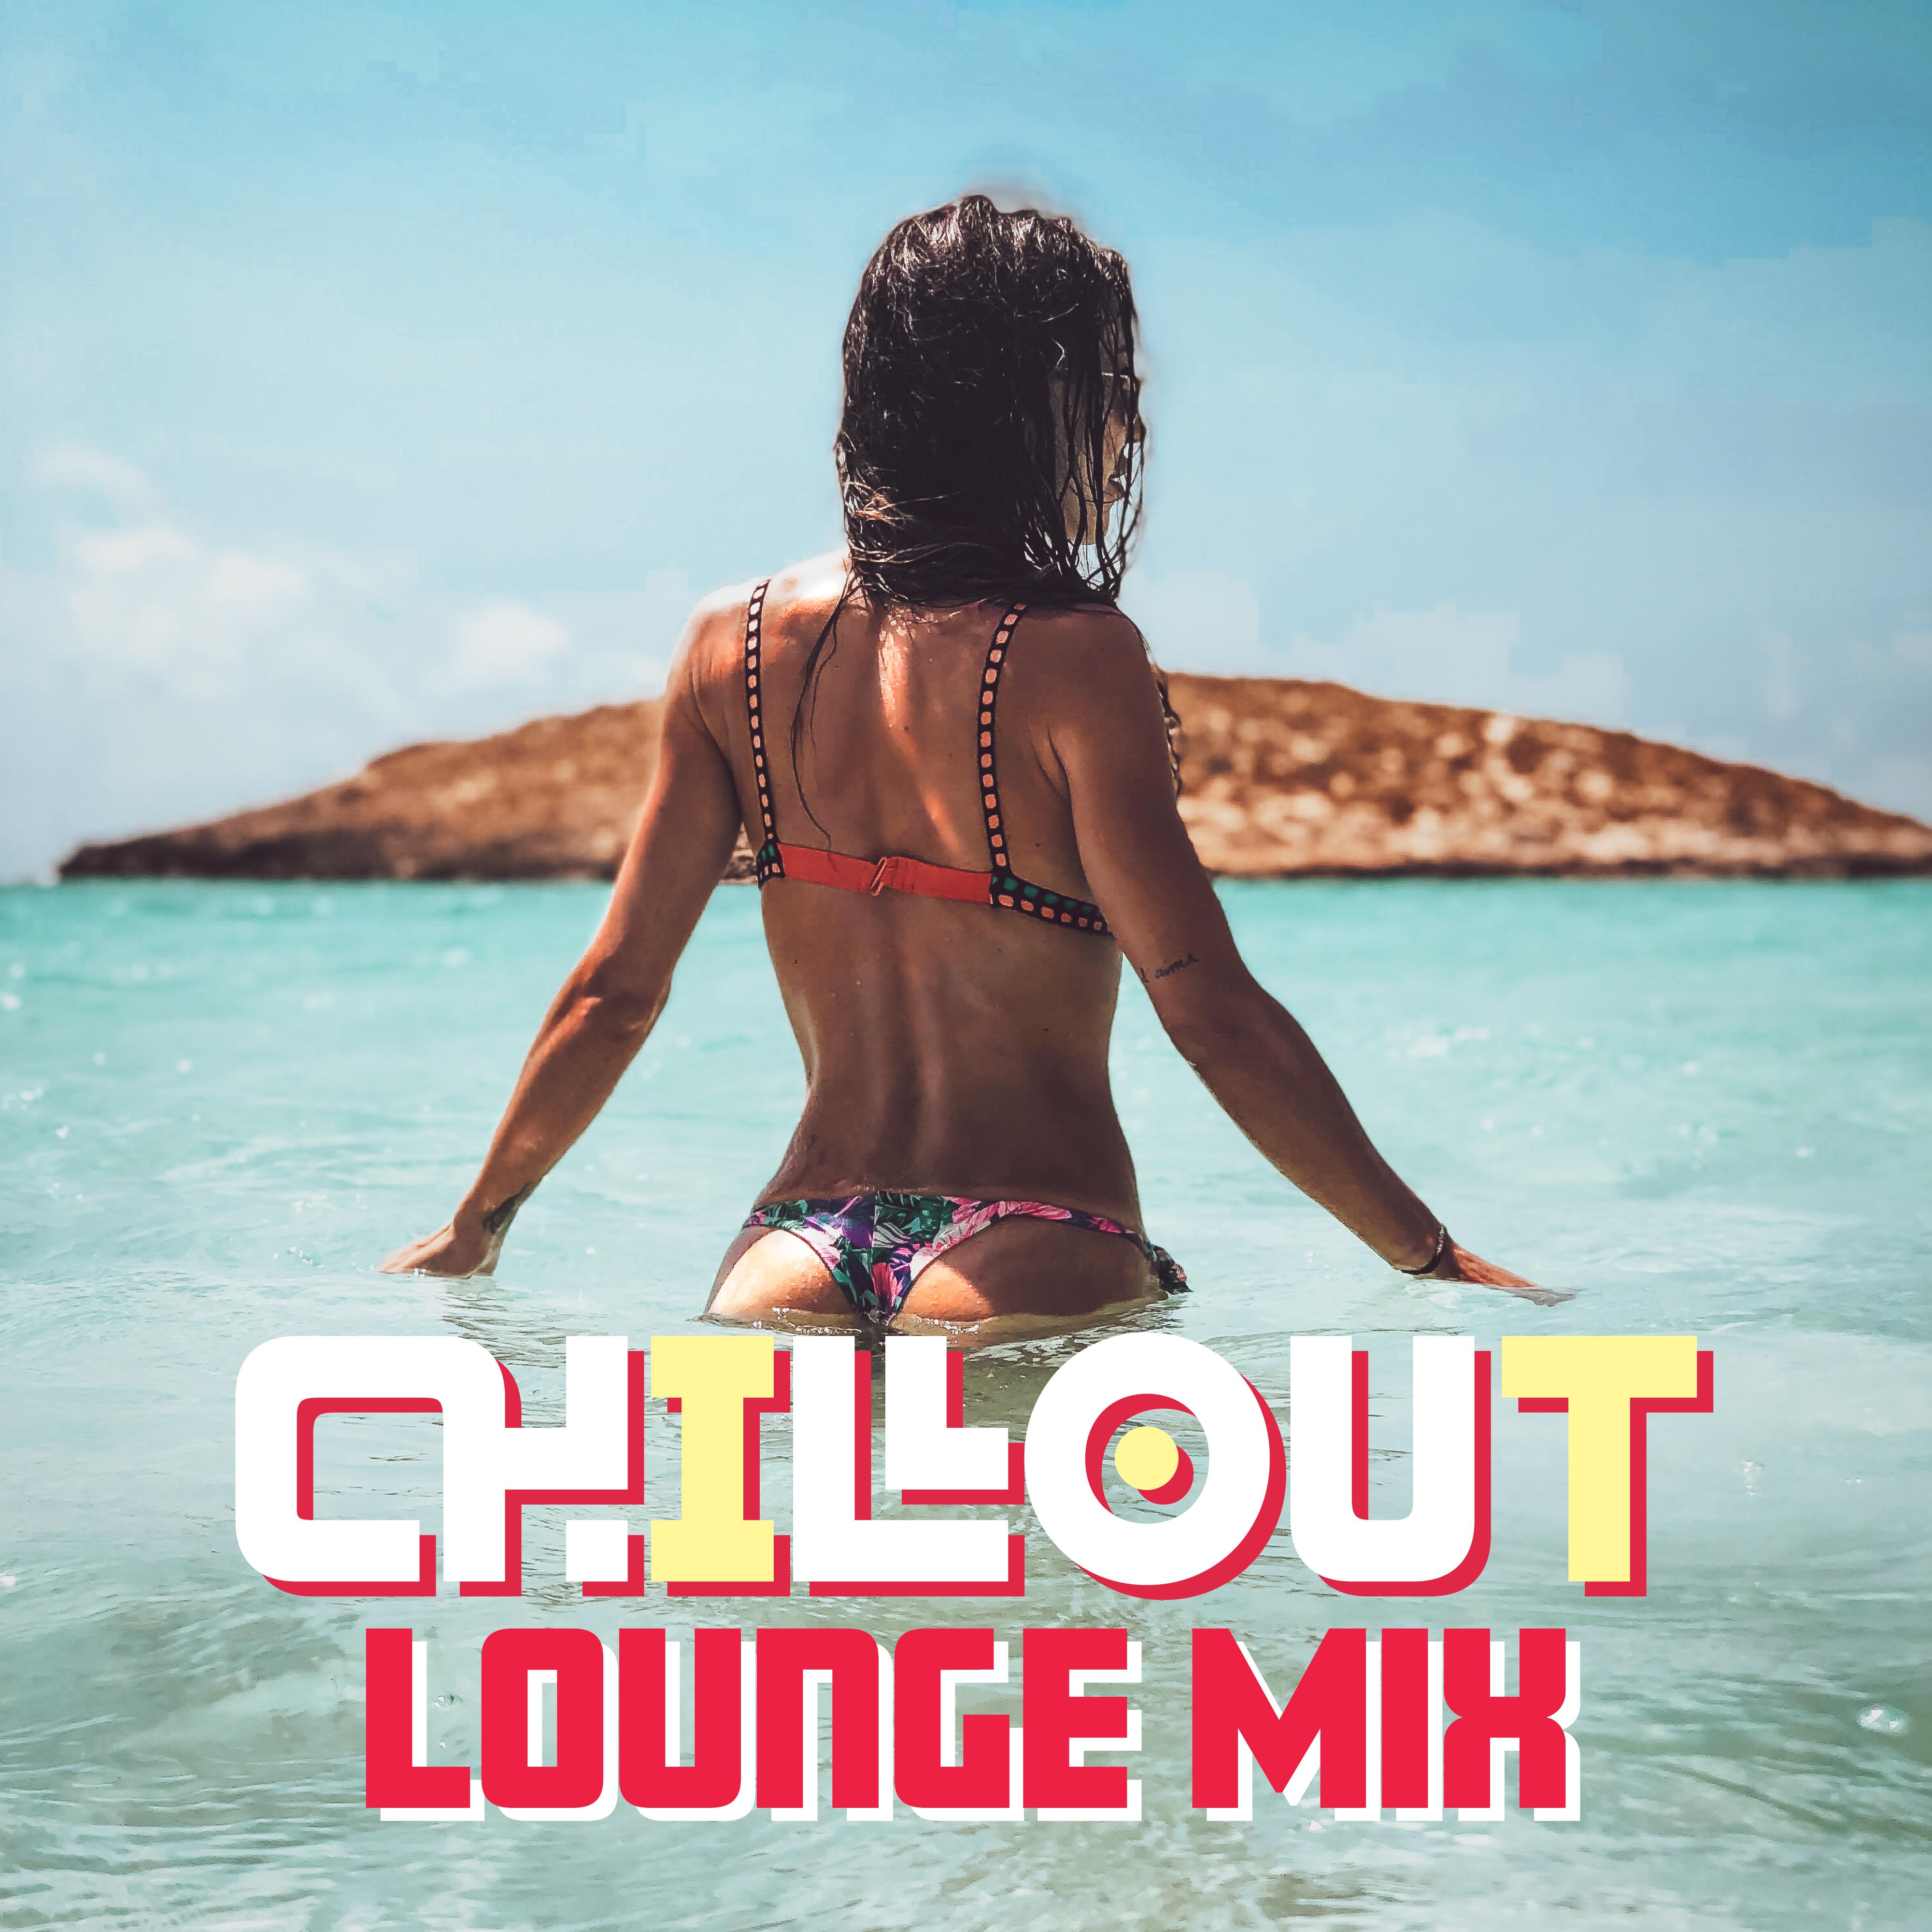 Chillout Lounge Mix – Tropical Chill, Ibiza Lounge, Music Zone, Summer Beach Music, Zen, Bar Lounge, Summer Vibes